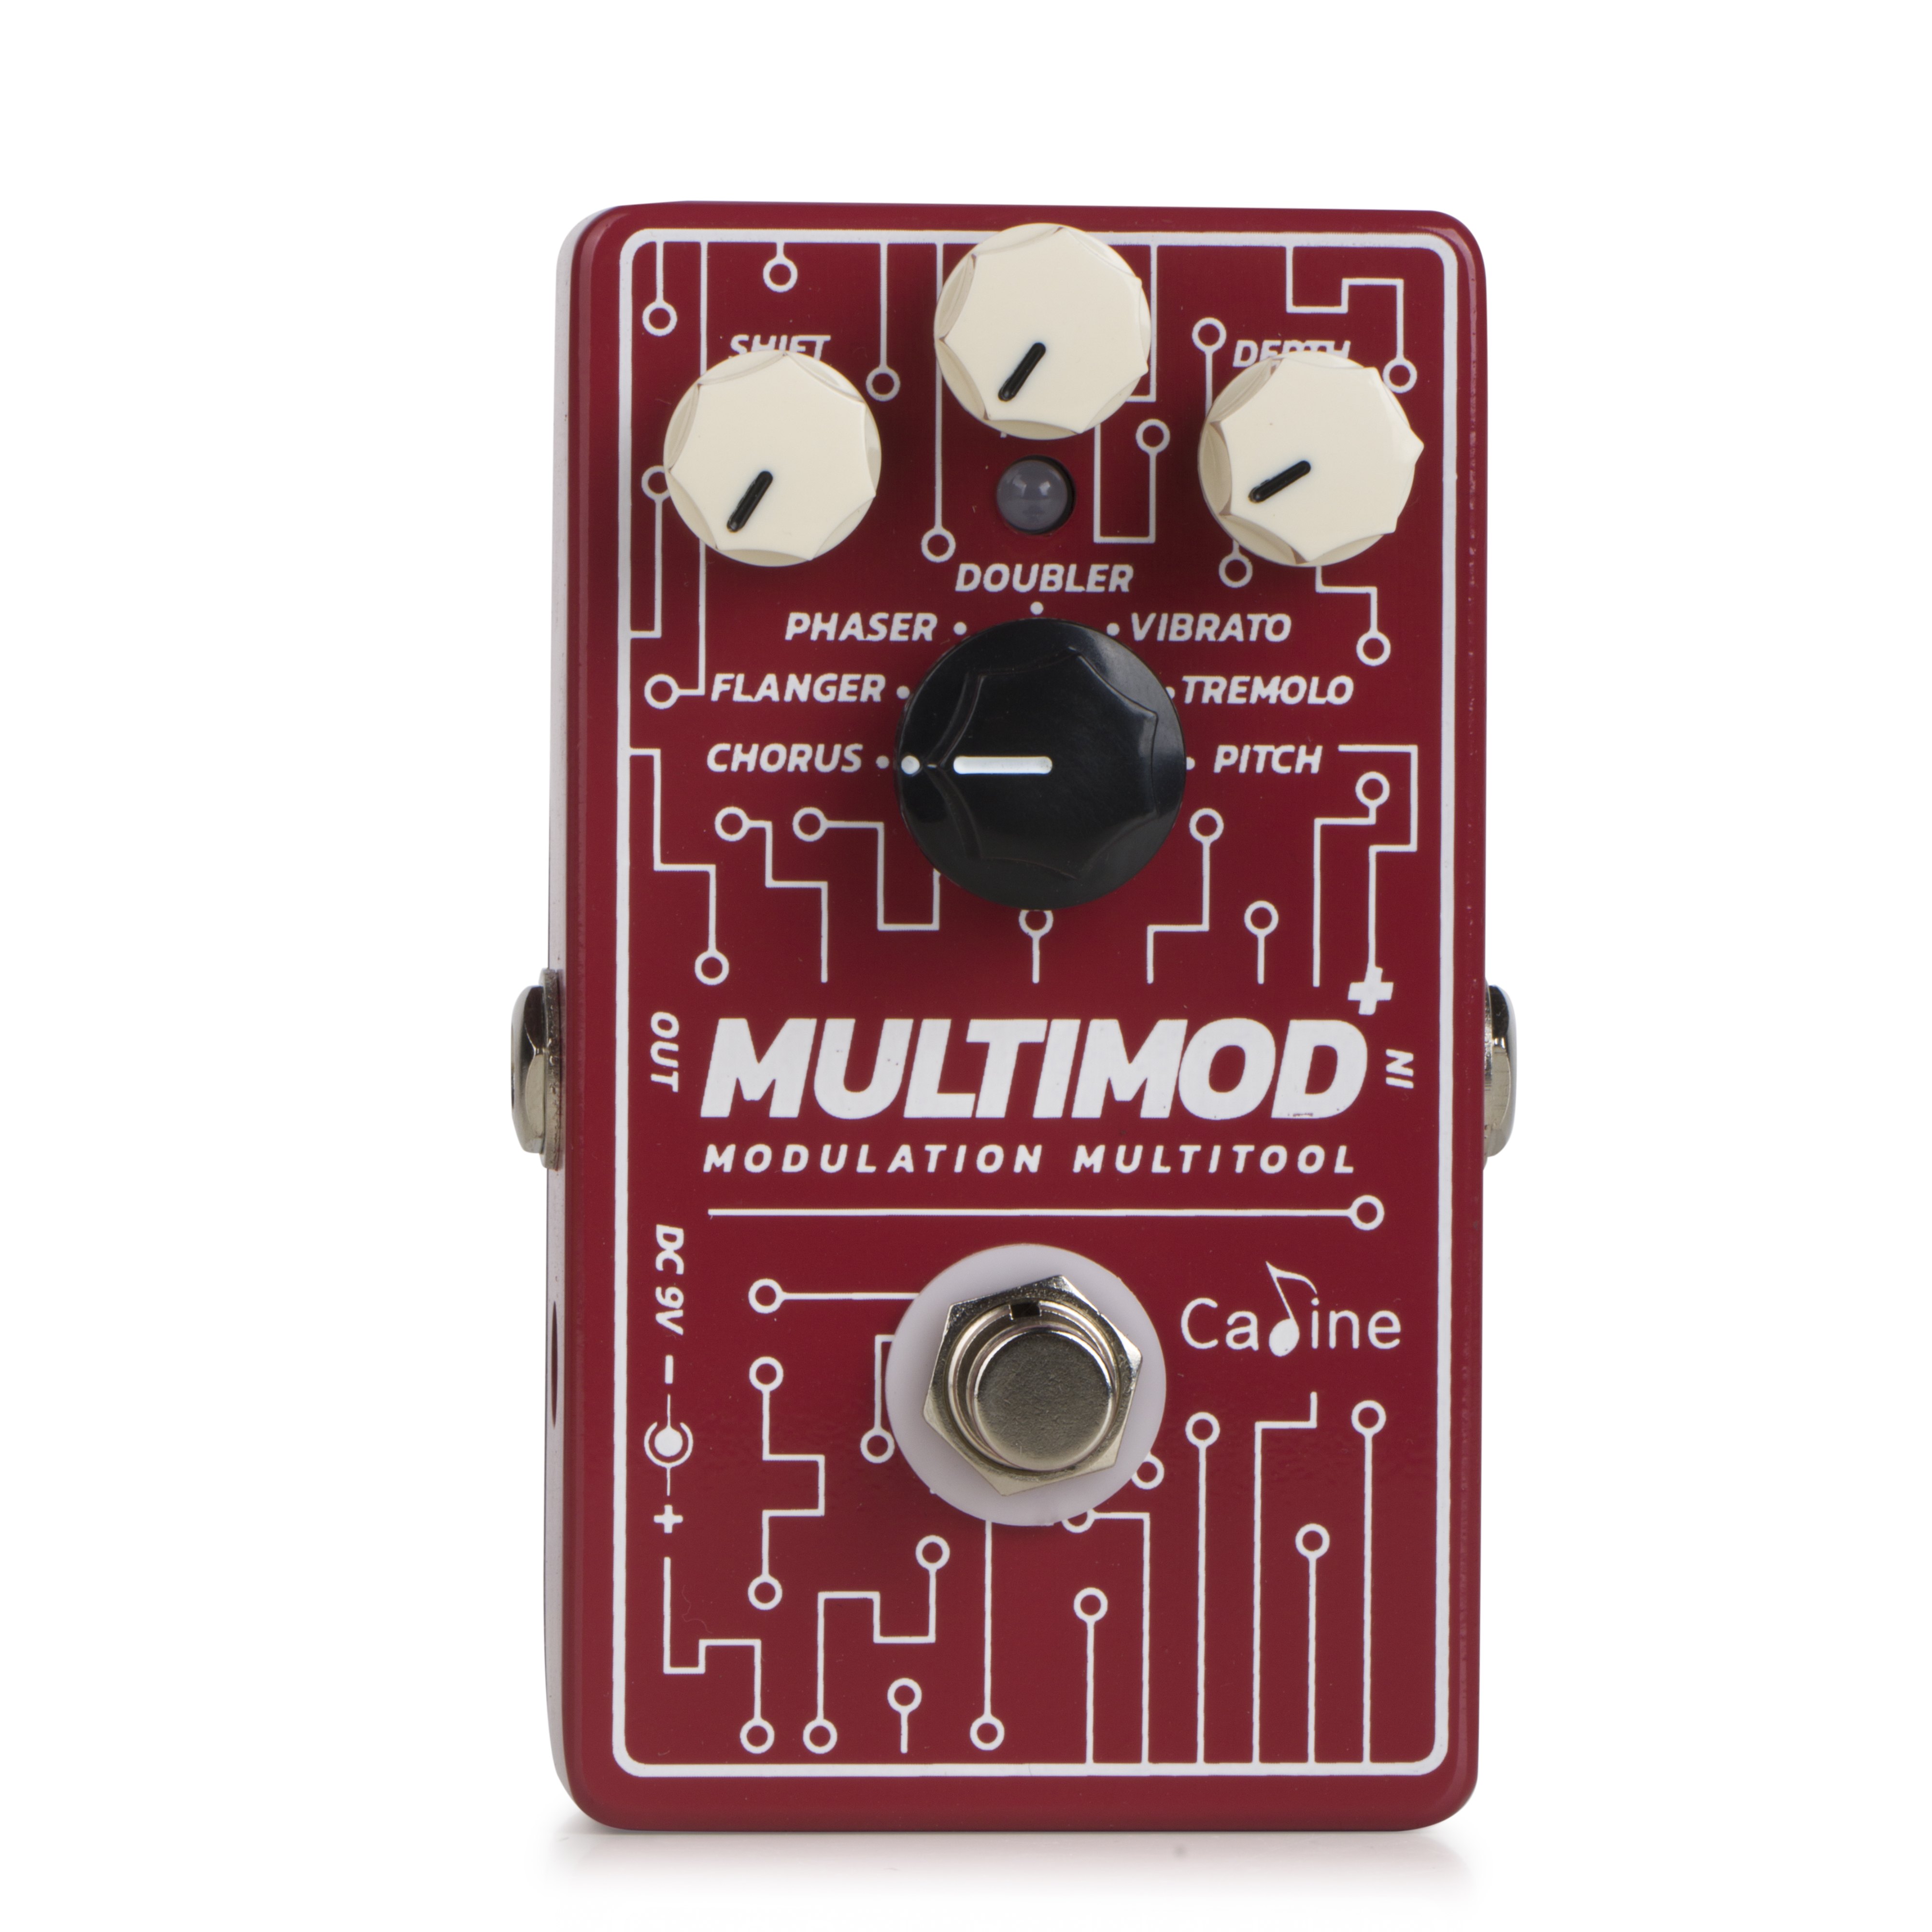 CP-506 Multimod – Modulation Multi tool